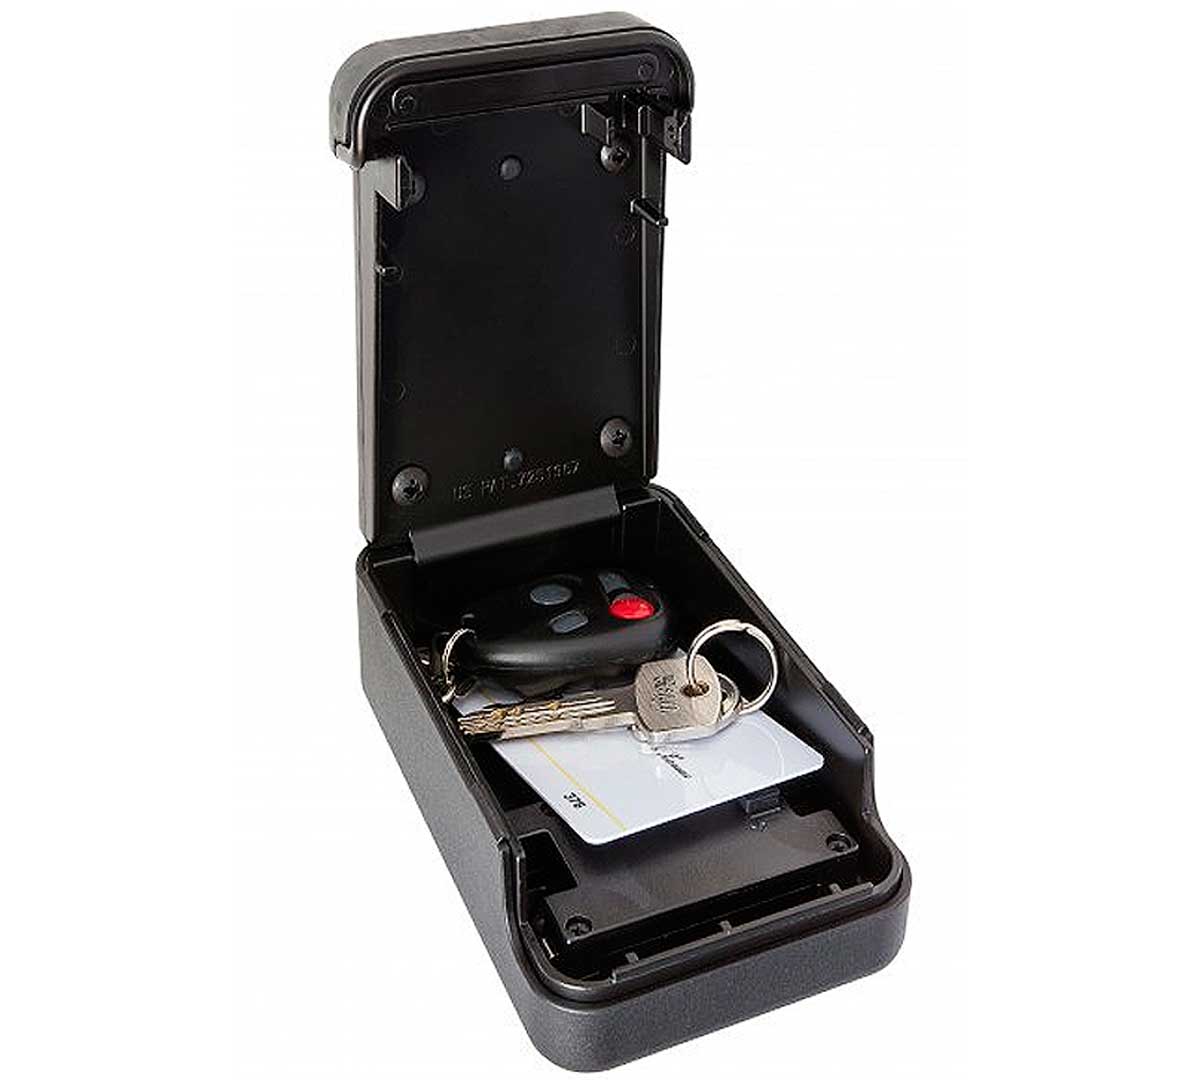 Keeper seg011 - Seguridad para objetos